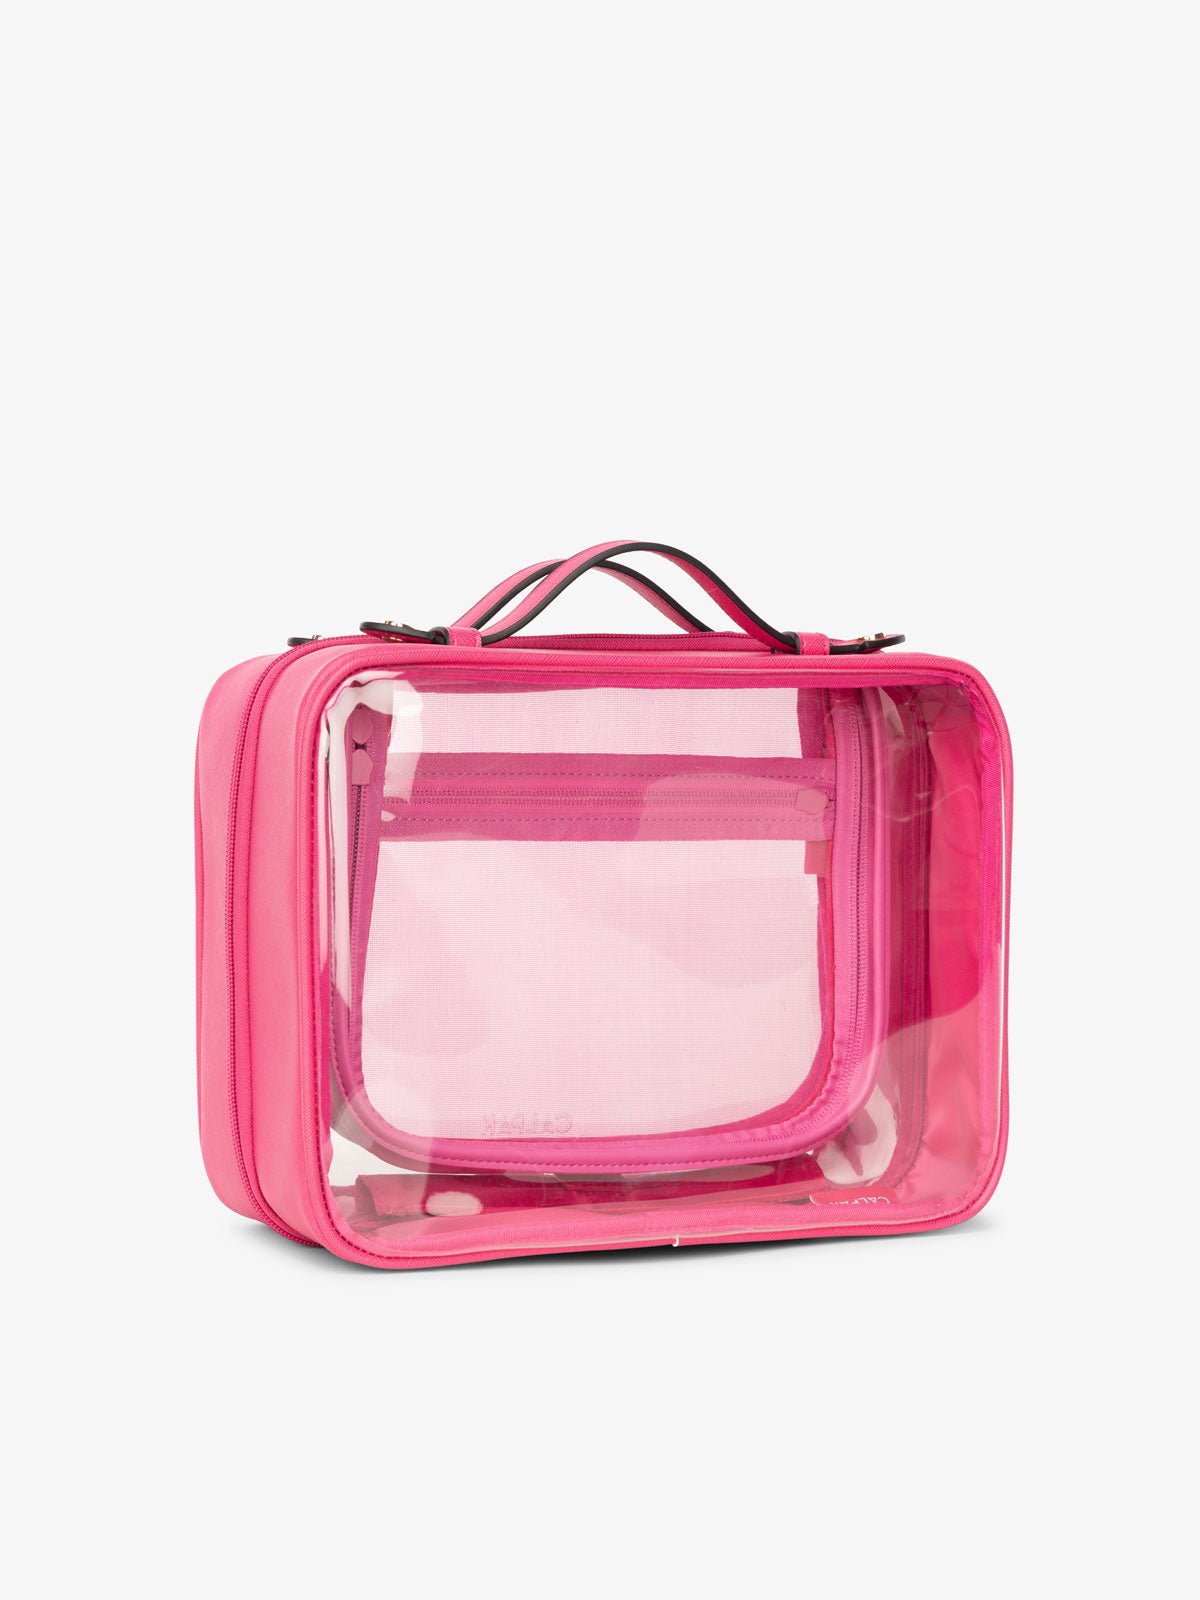 transparent cosmetics case in pink dragonfruit